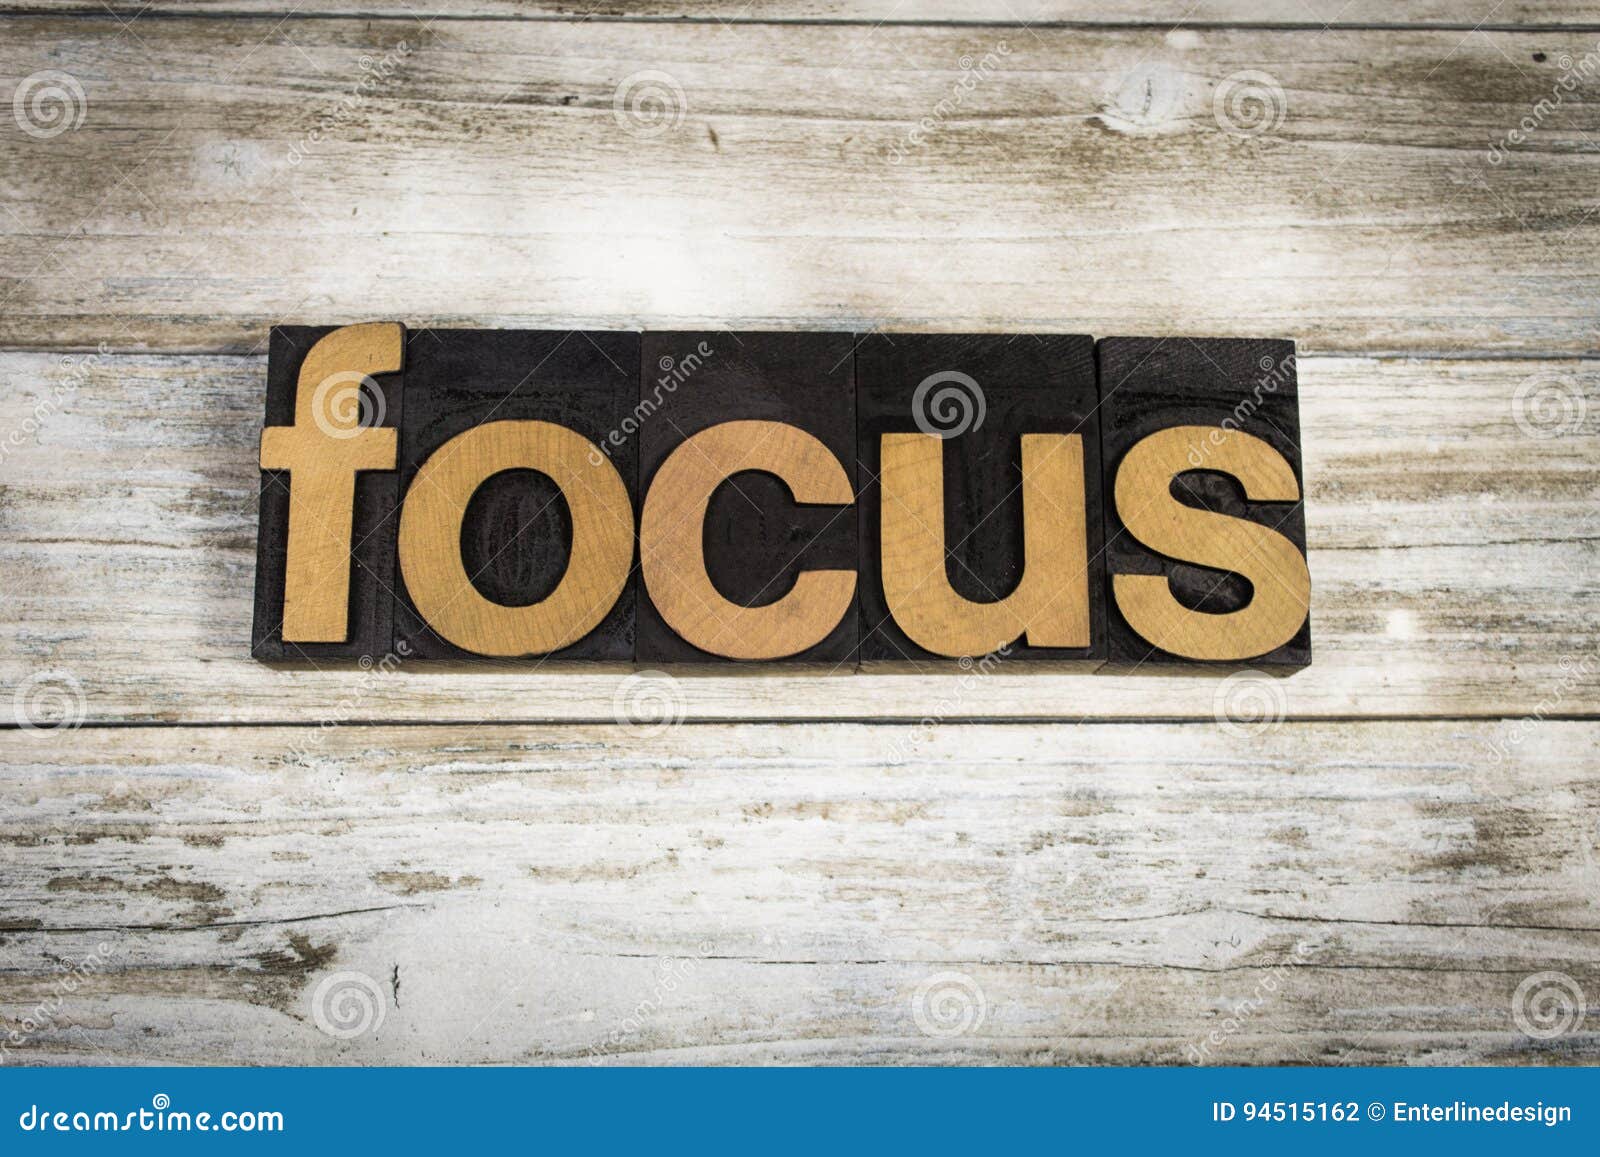 focus letterpress word on wooden background